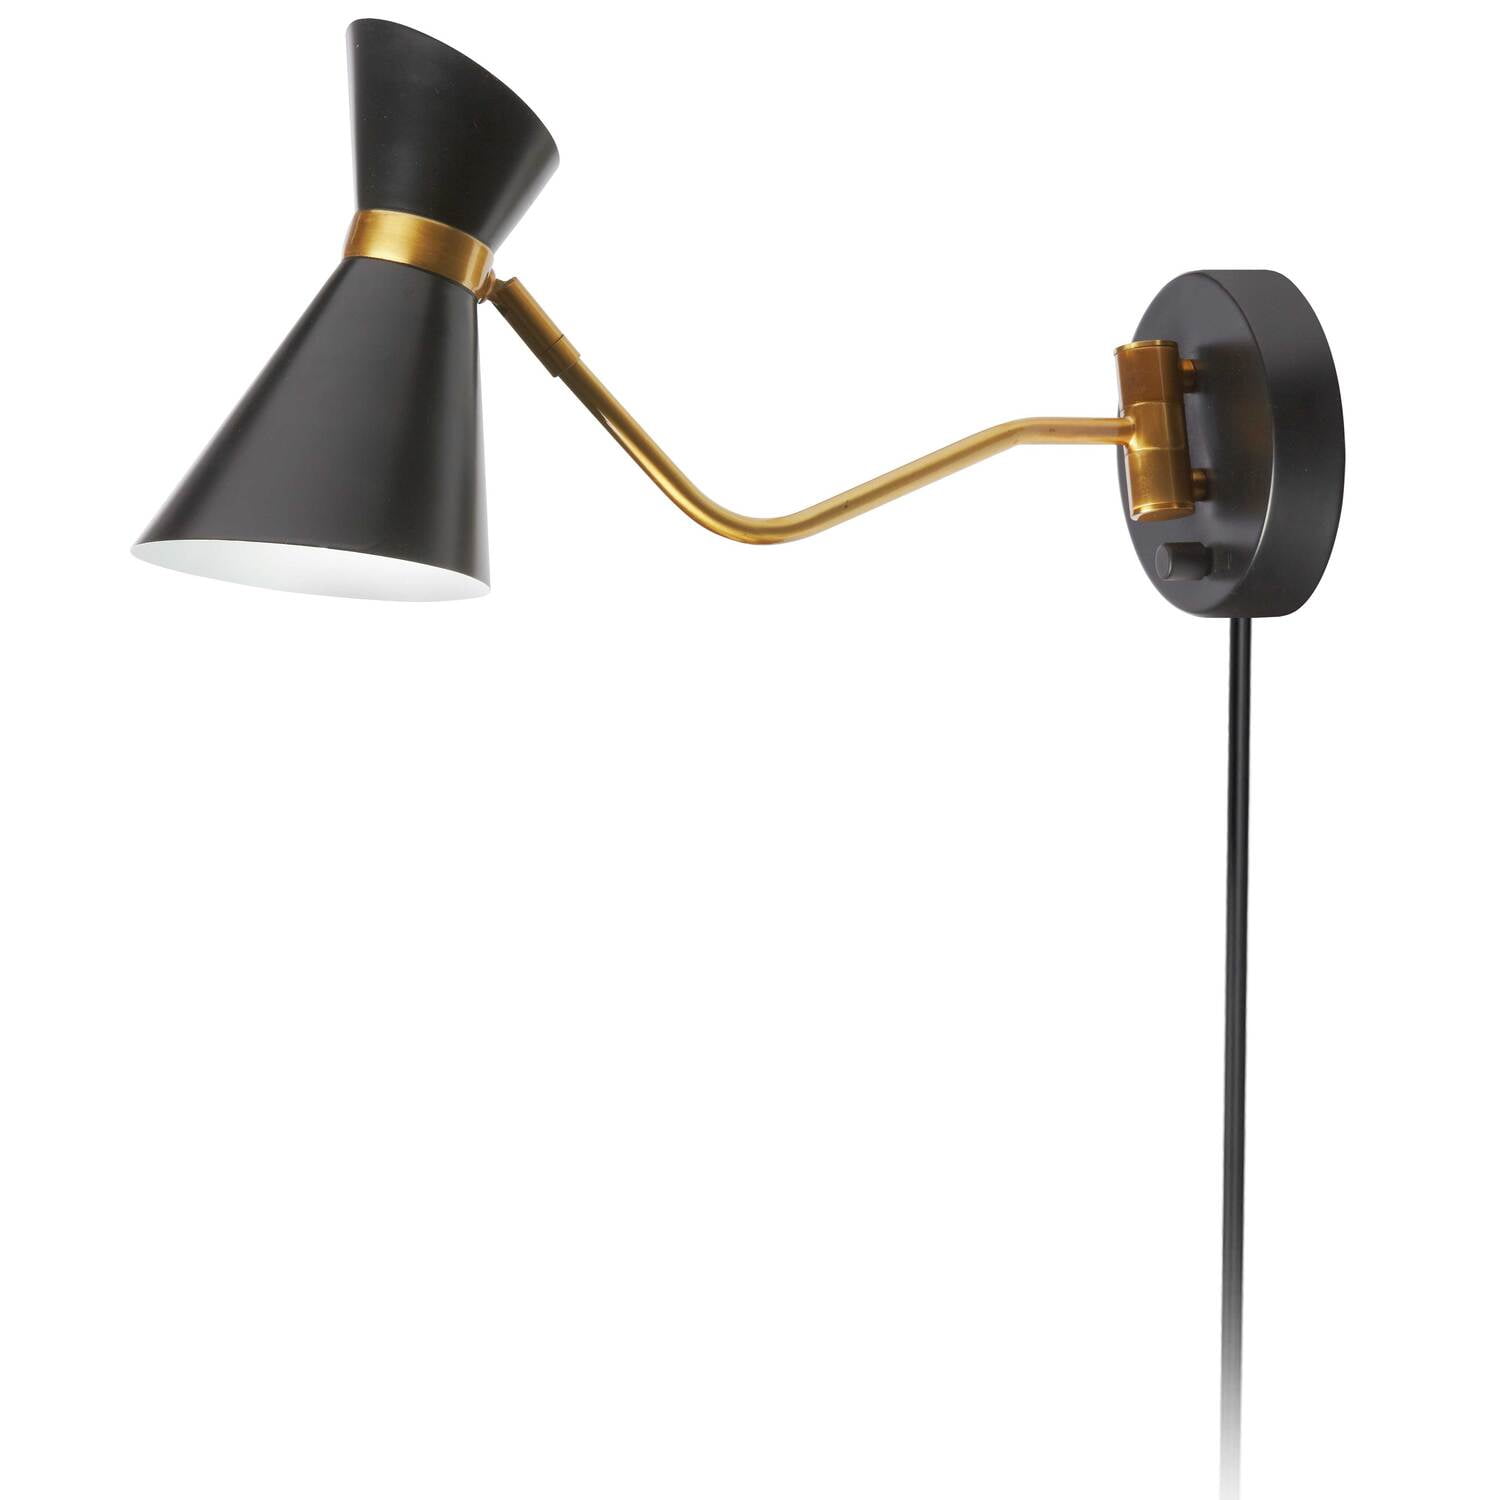 1 Light Swing Arm Lamp, Black & Vintage Bronze Finish